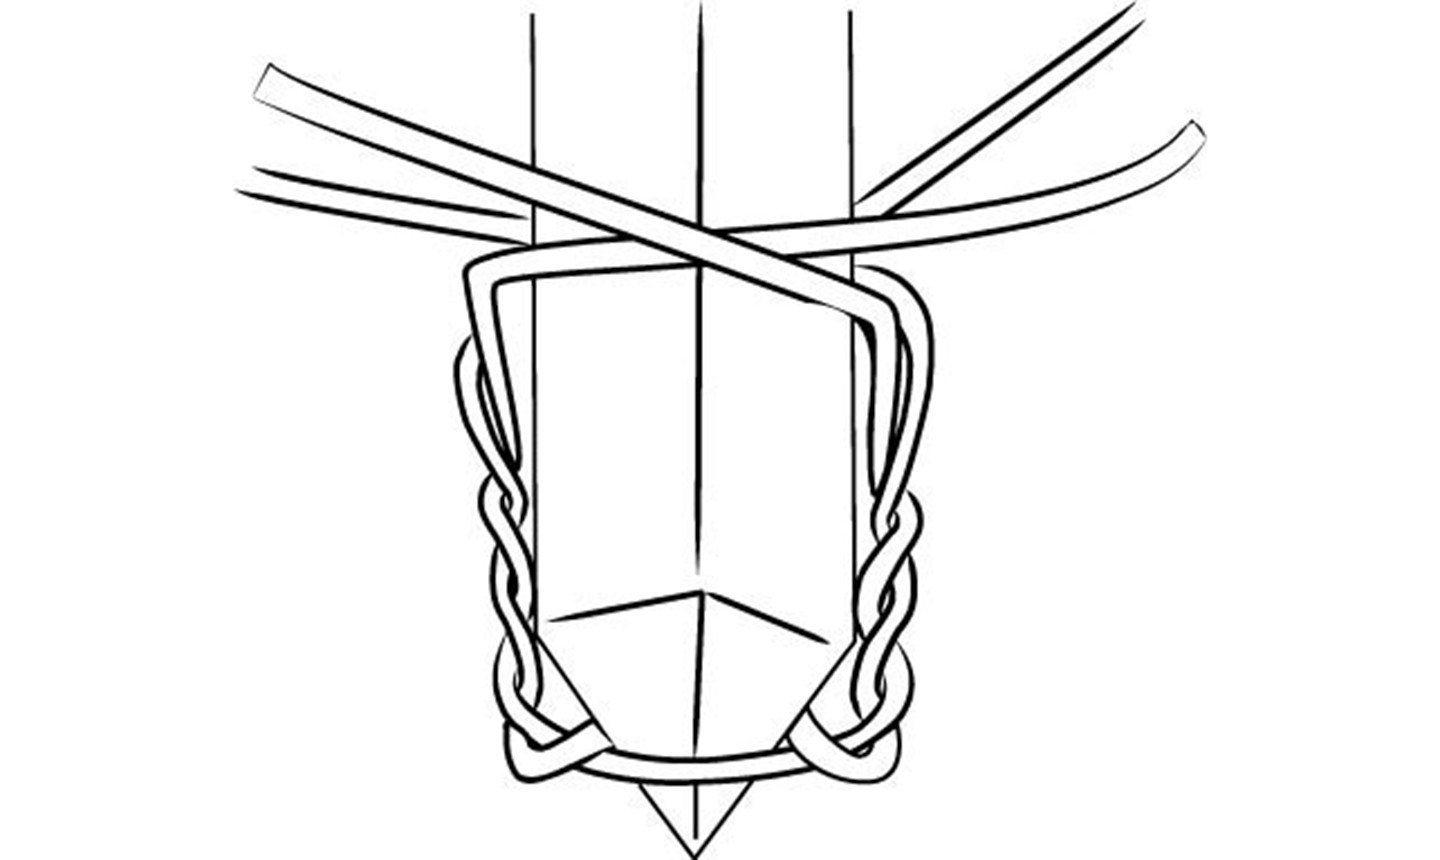 crossing wire illustration